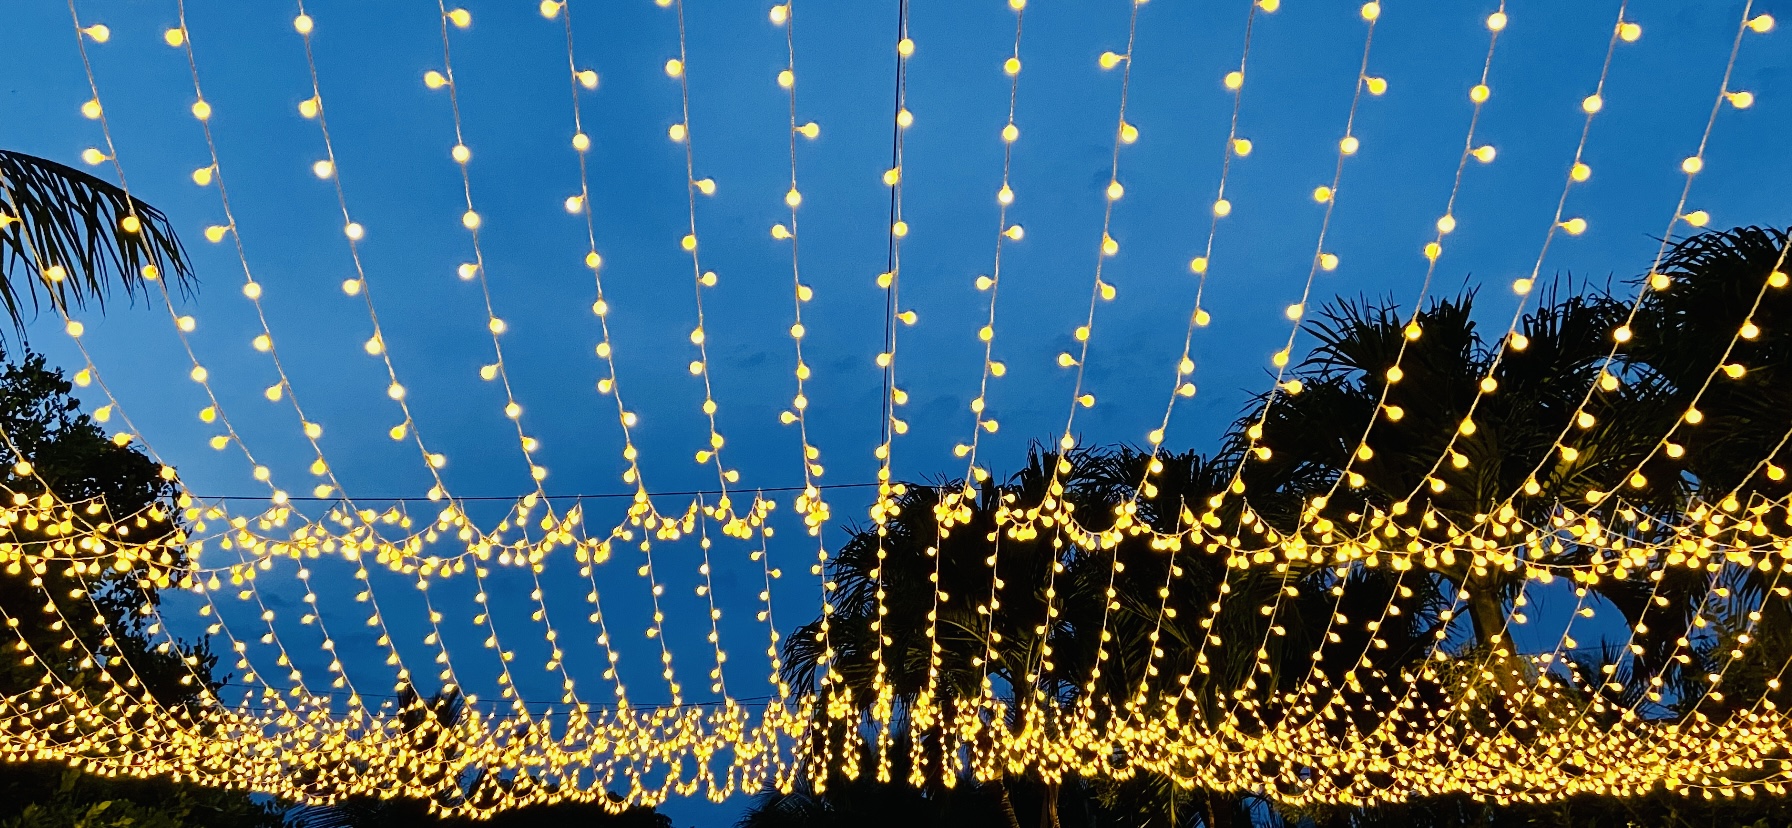 Lighting, bat mitzvah, decorative LED globe string lights, Cooper City, FL